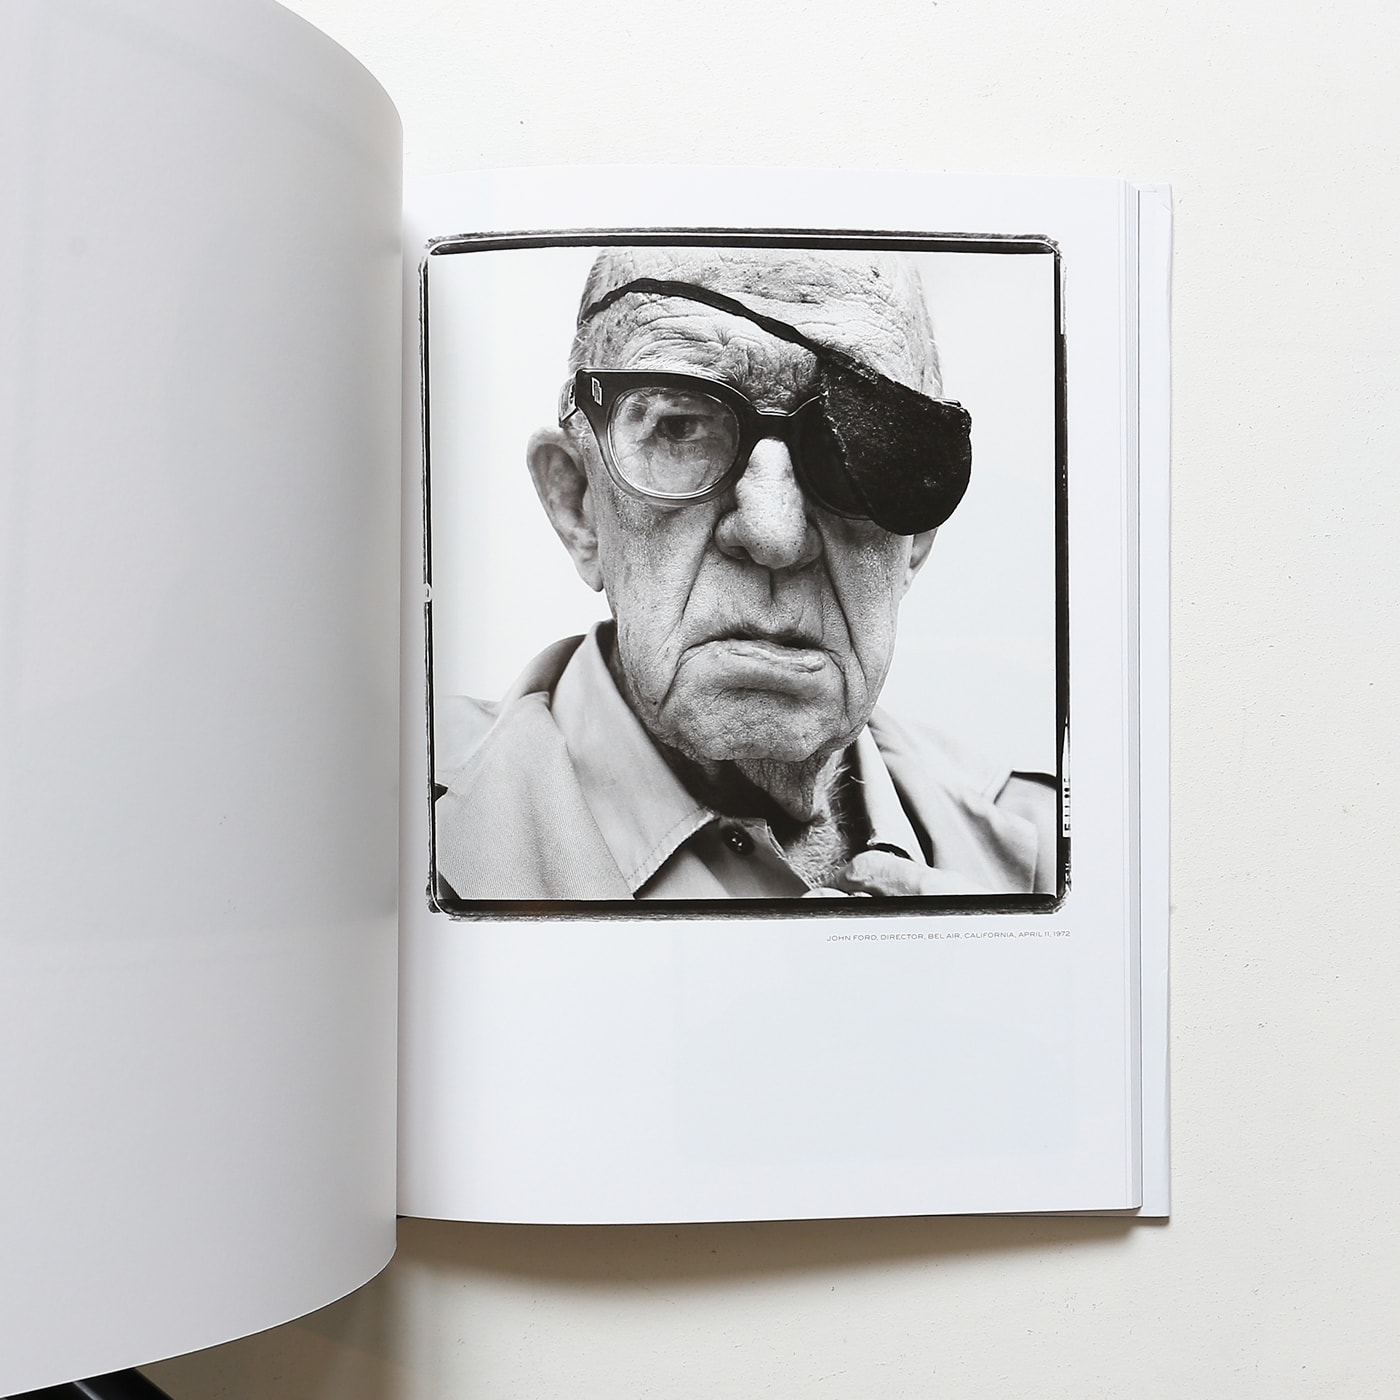 Richard Avedon: Photographs 1946-2004